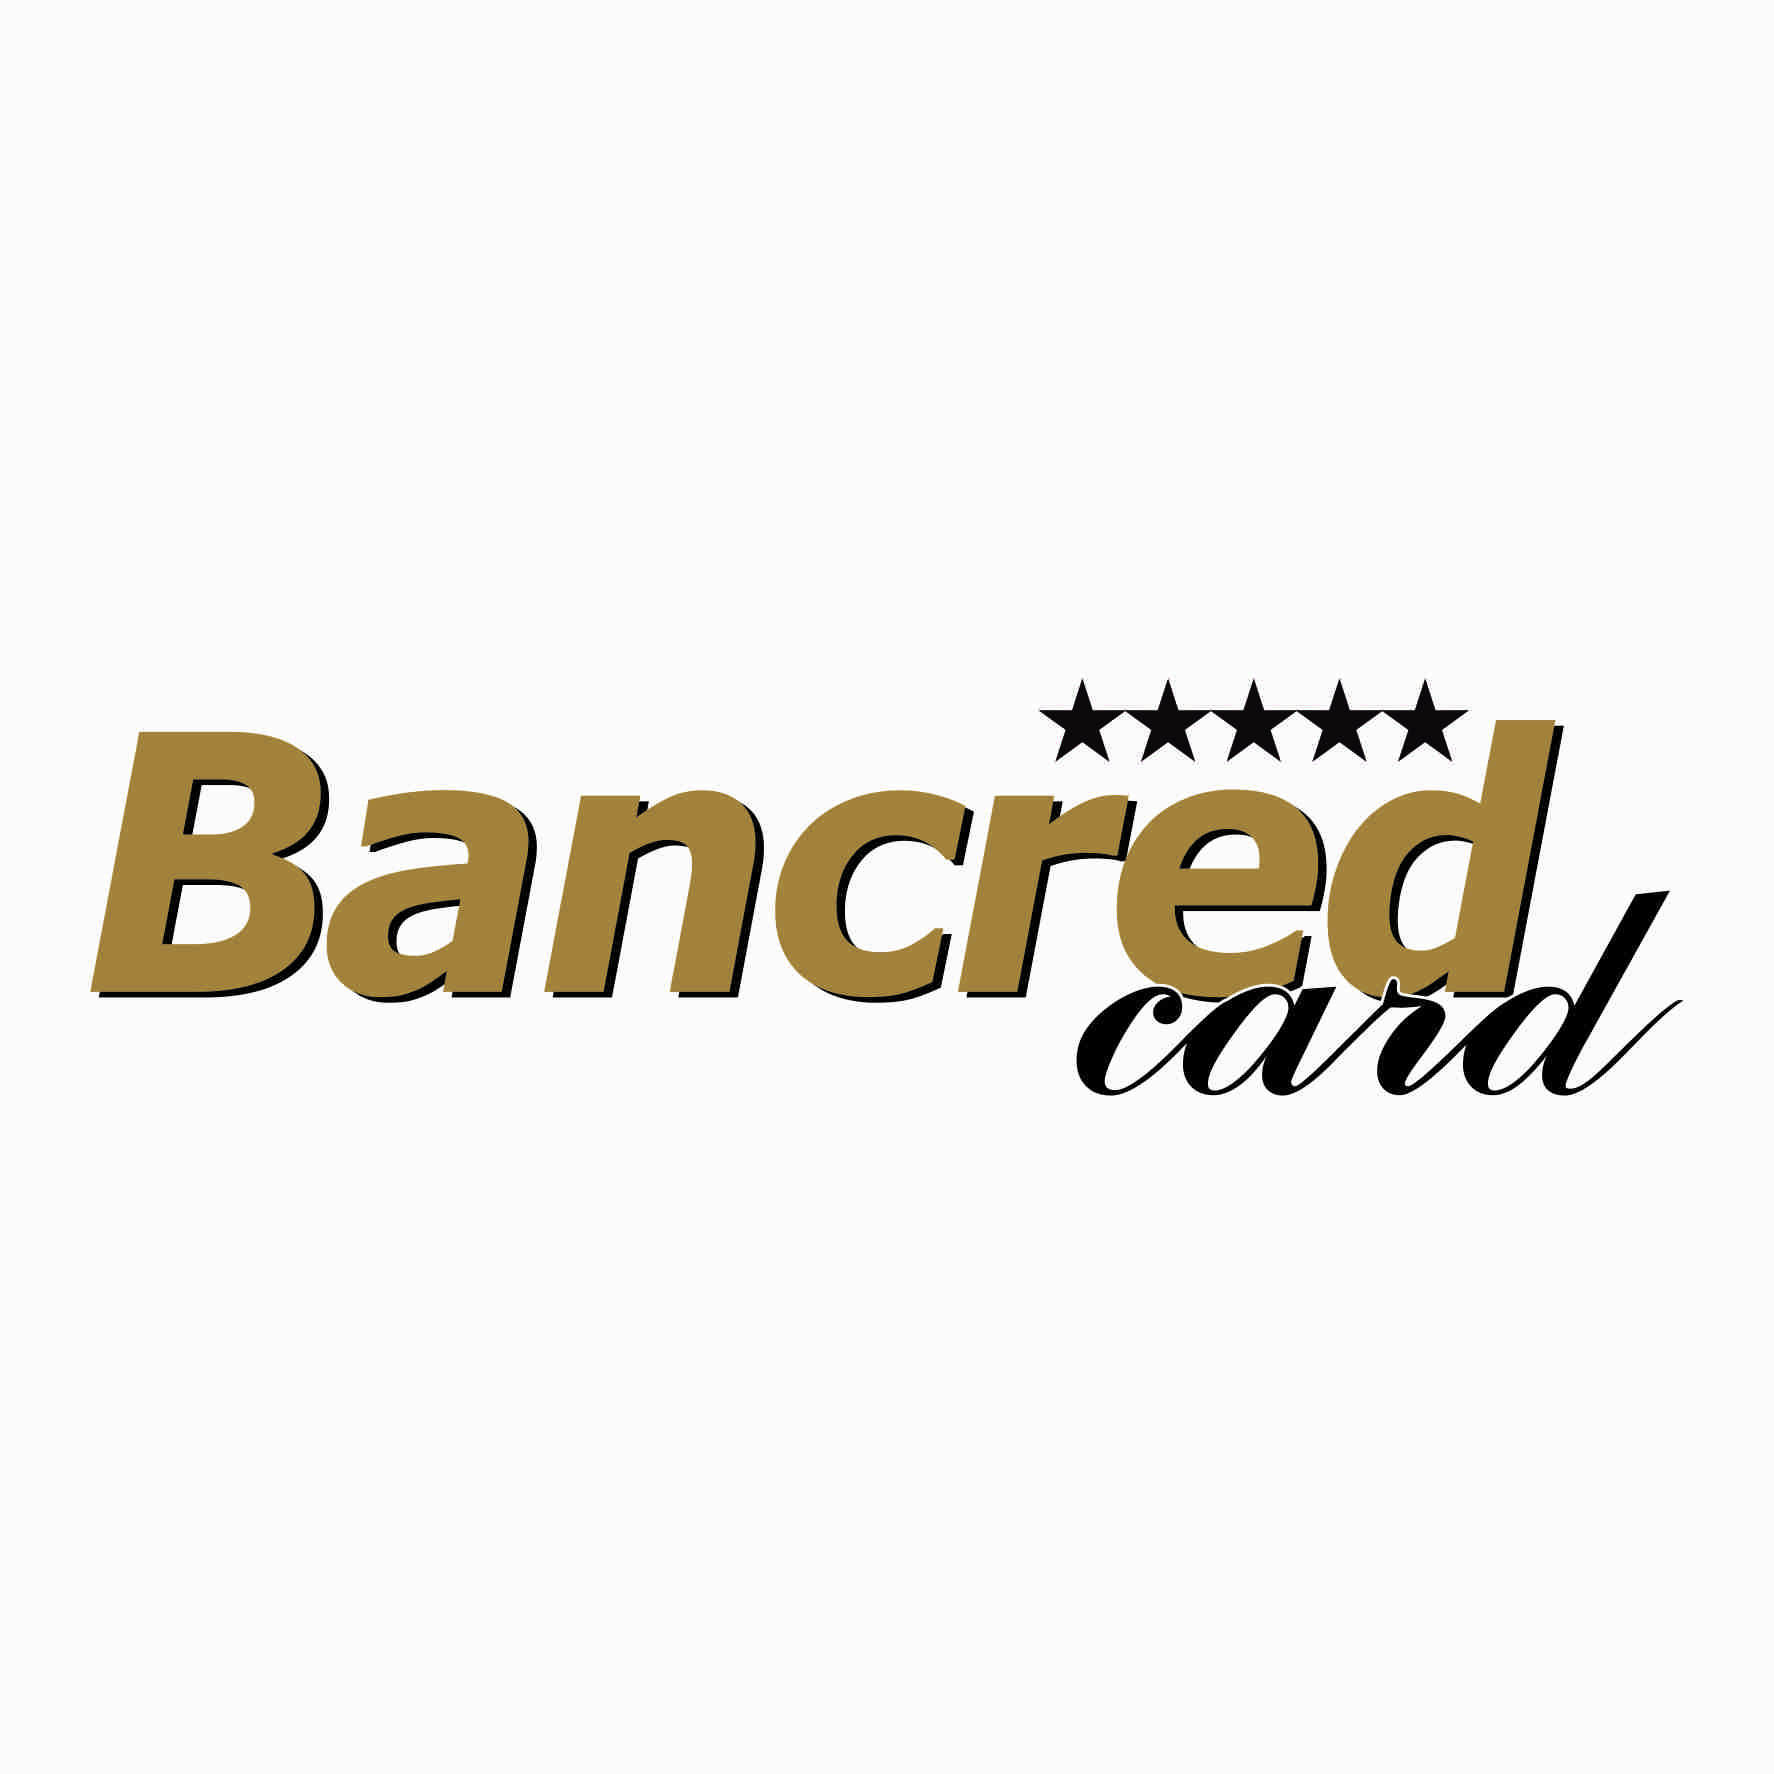 Bancred Card Logo photo - 1